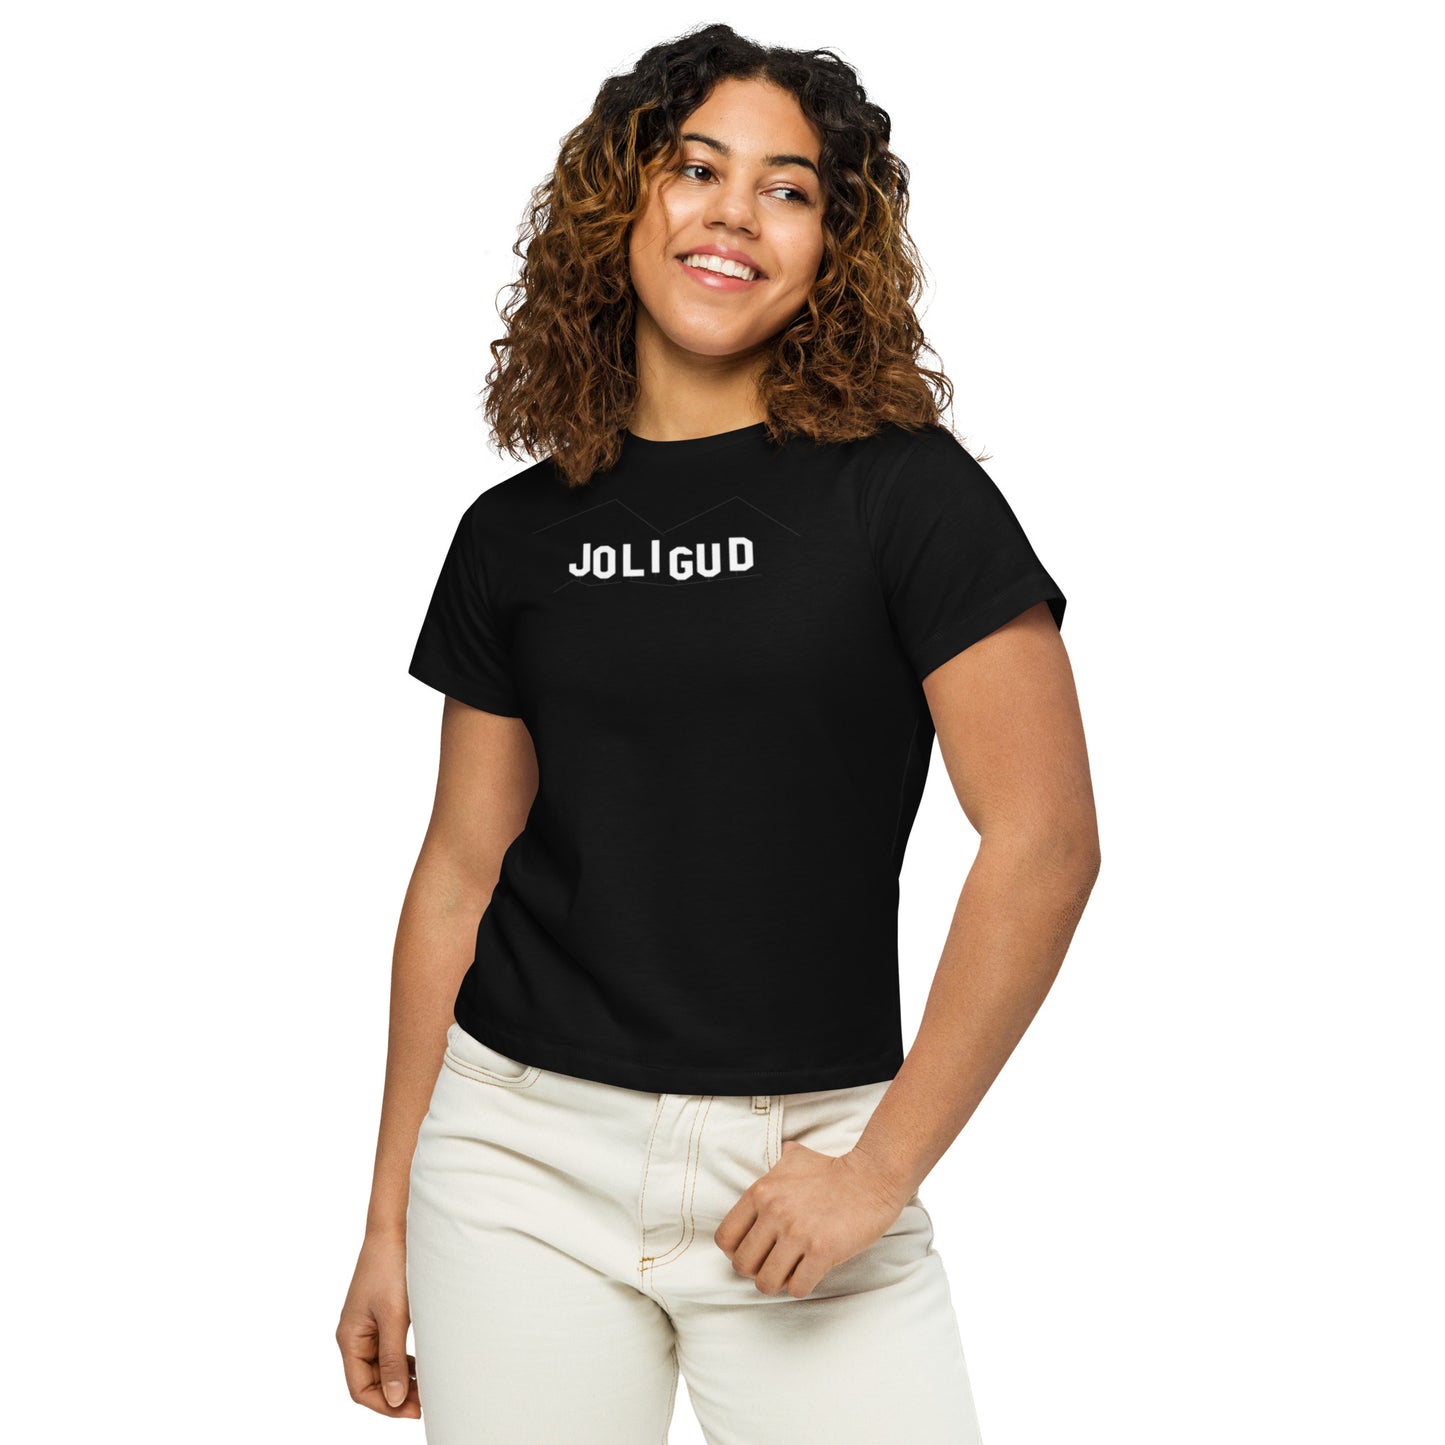 T-shirt for women "Joligud"